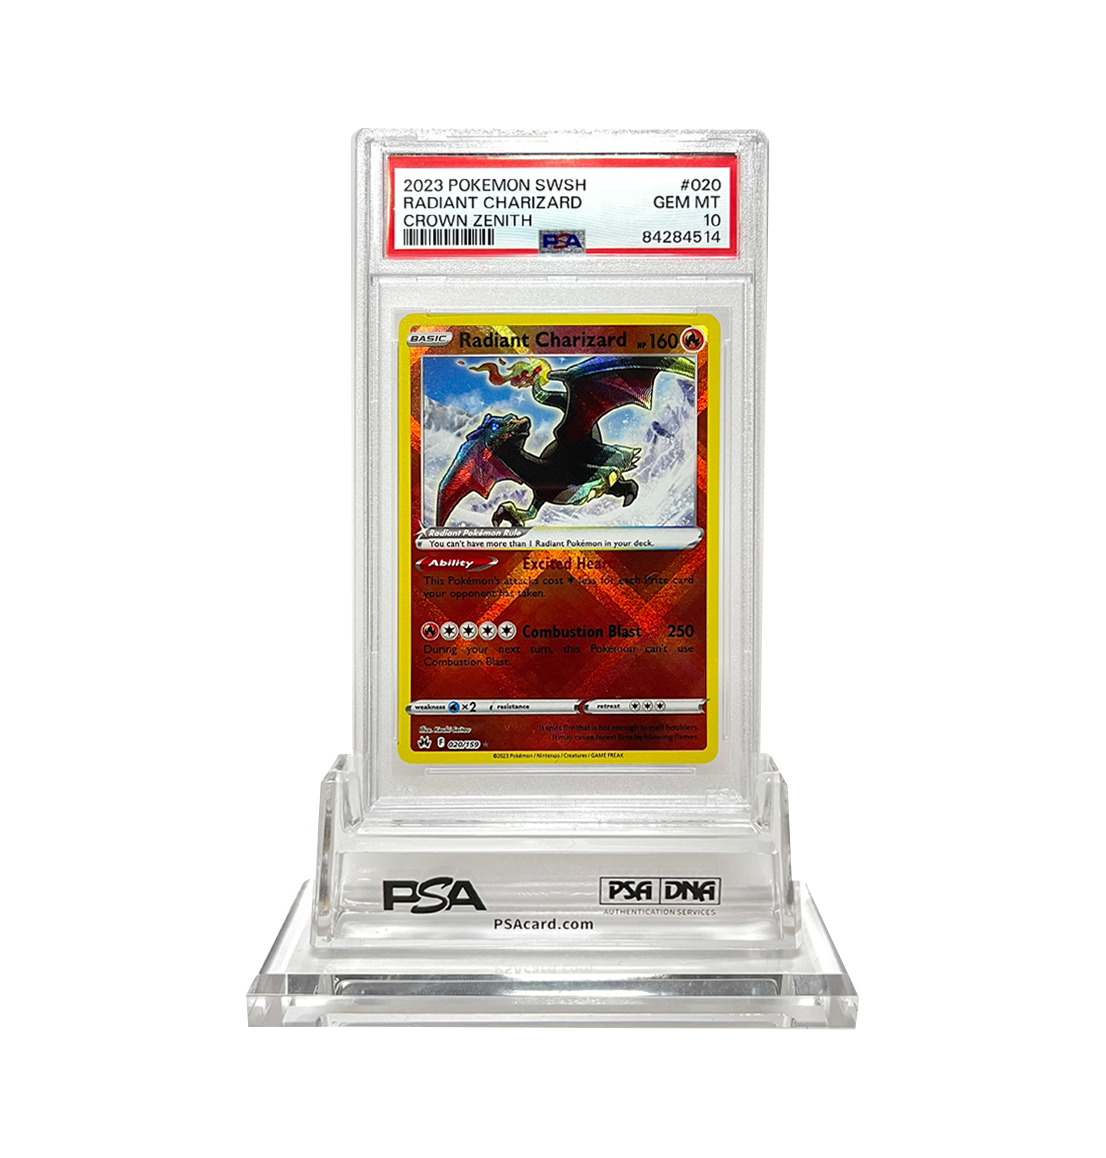 PSA 10 Radiant Charizard Crown Zenith 020 Pokemon card